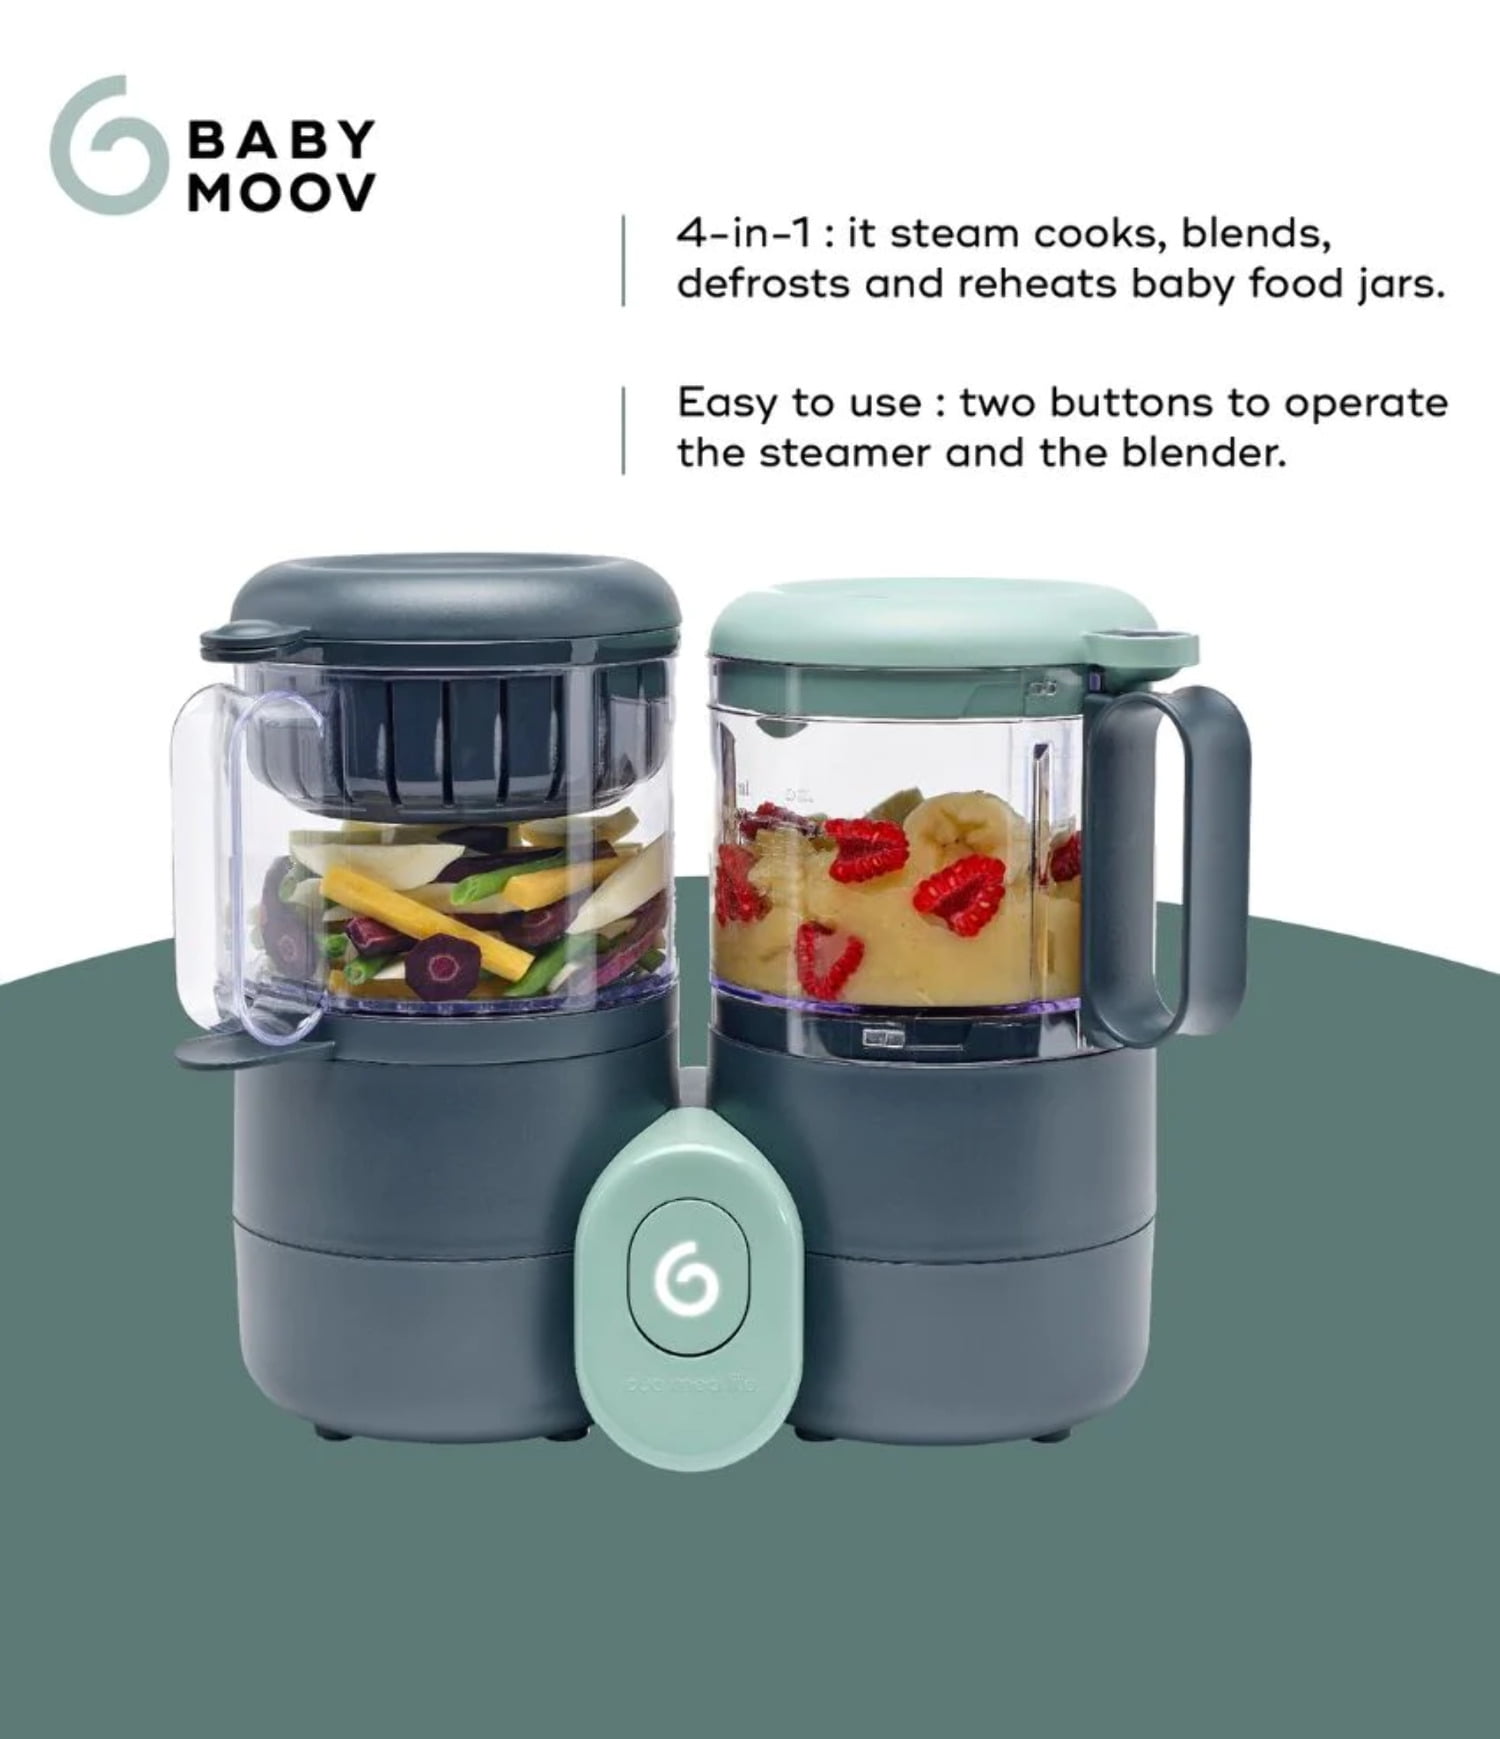 Babymoov Nutribaby - 5 in 1 Baby Food Maker with Steam Cooker, Blend &  Puree, Warmer, Defroster, Sterilizer (Zen) 